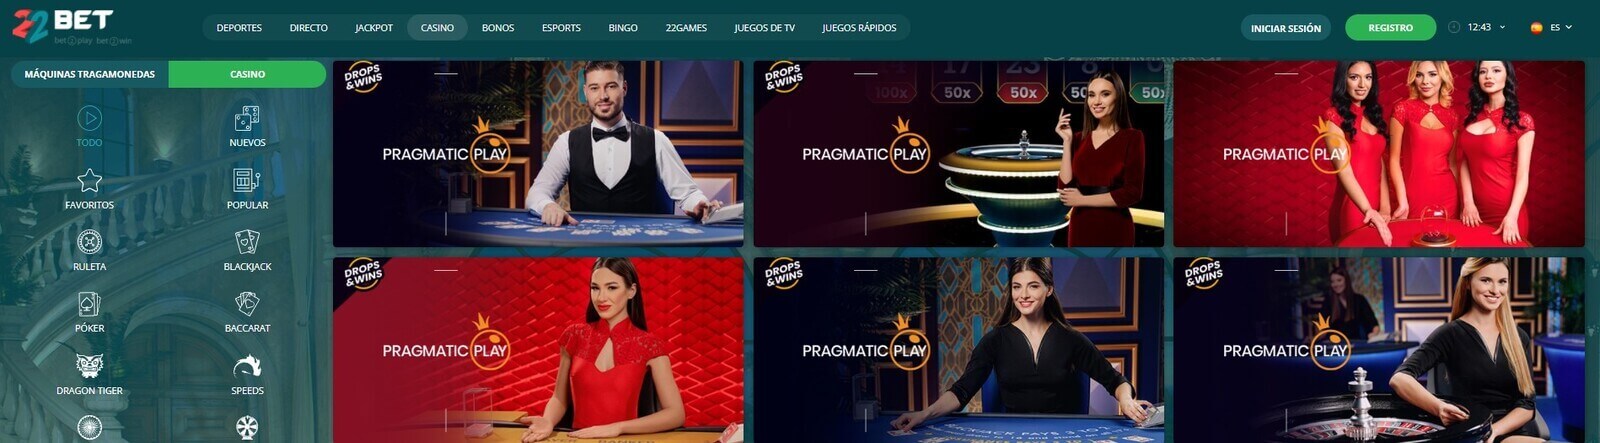 22Bet Casino online en Panamá